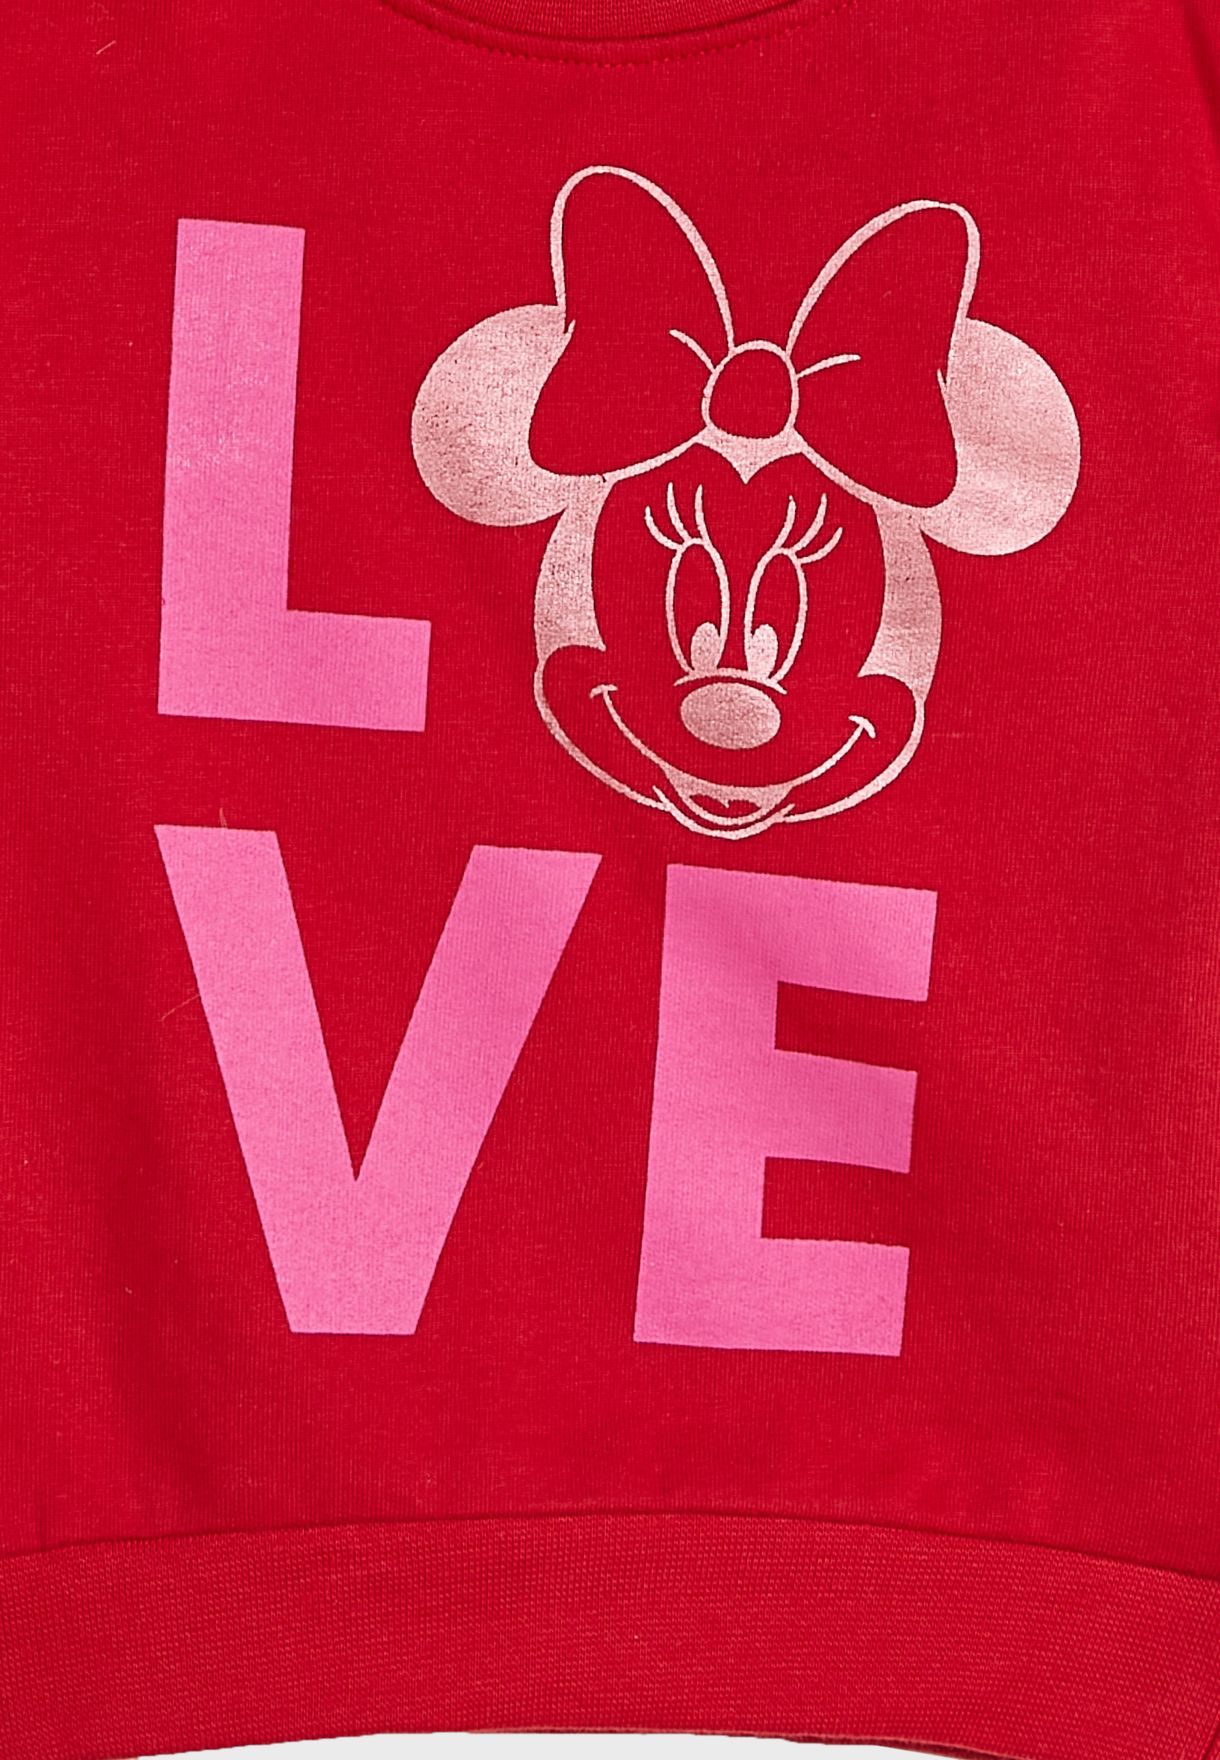 Infant Minnie Mouse Sweatshirt